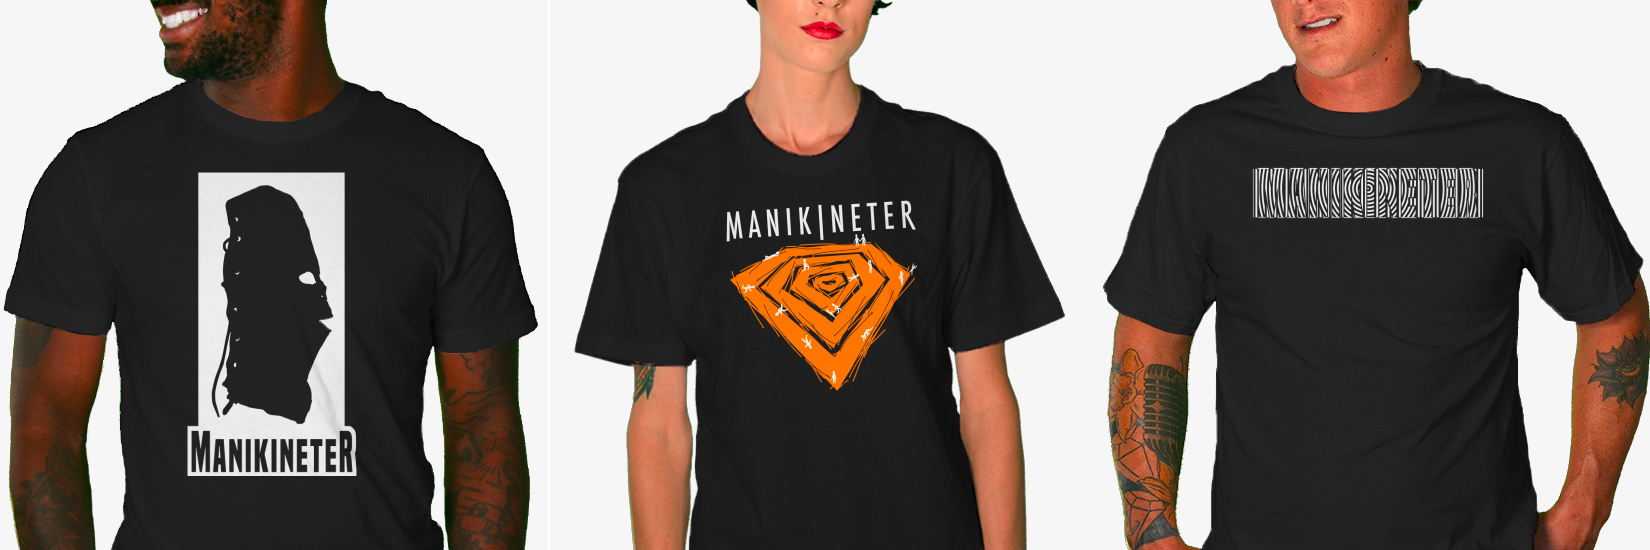 New Manikineter shirt designs